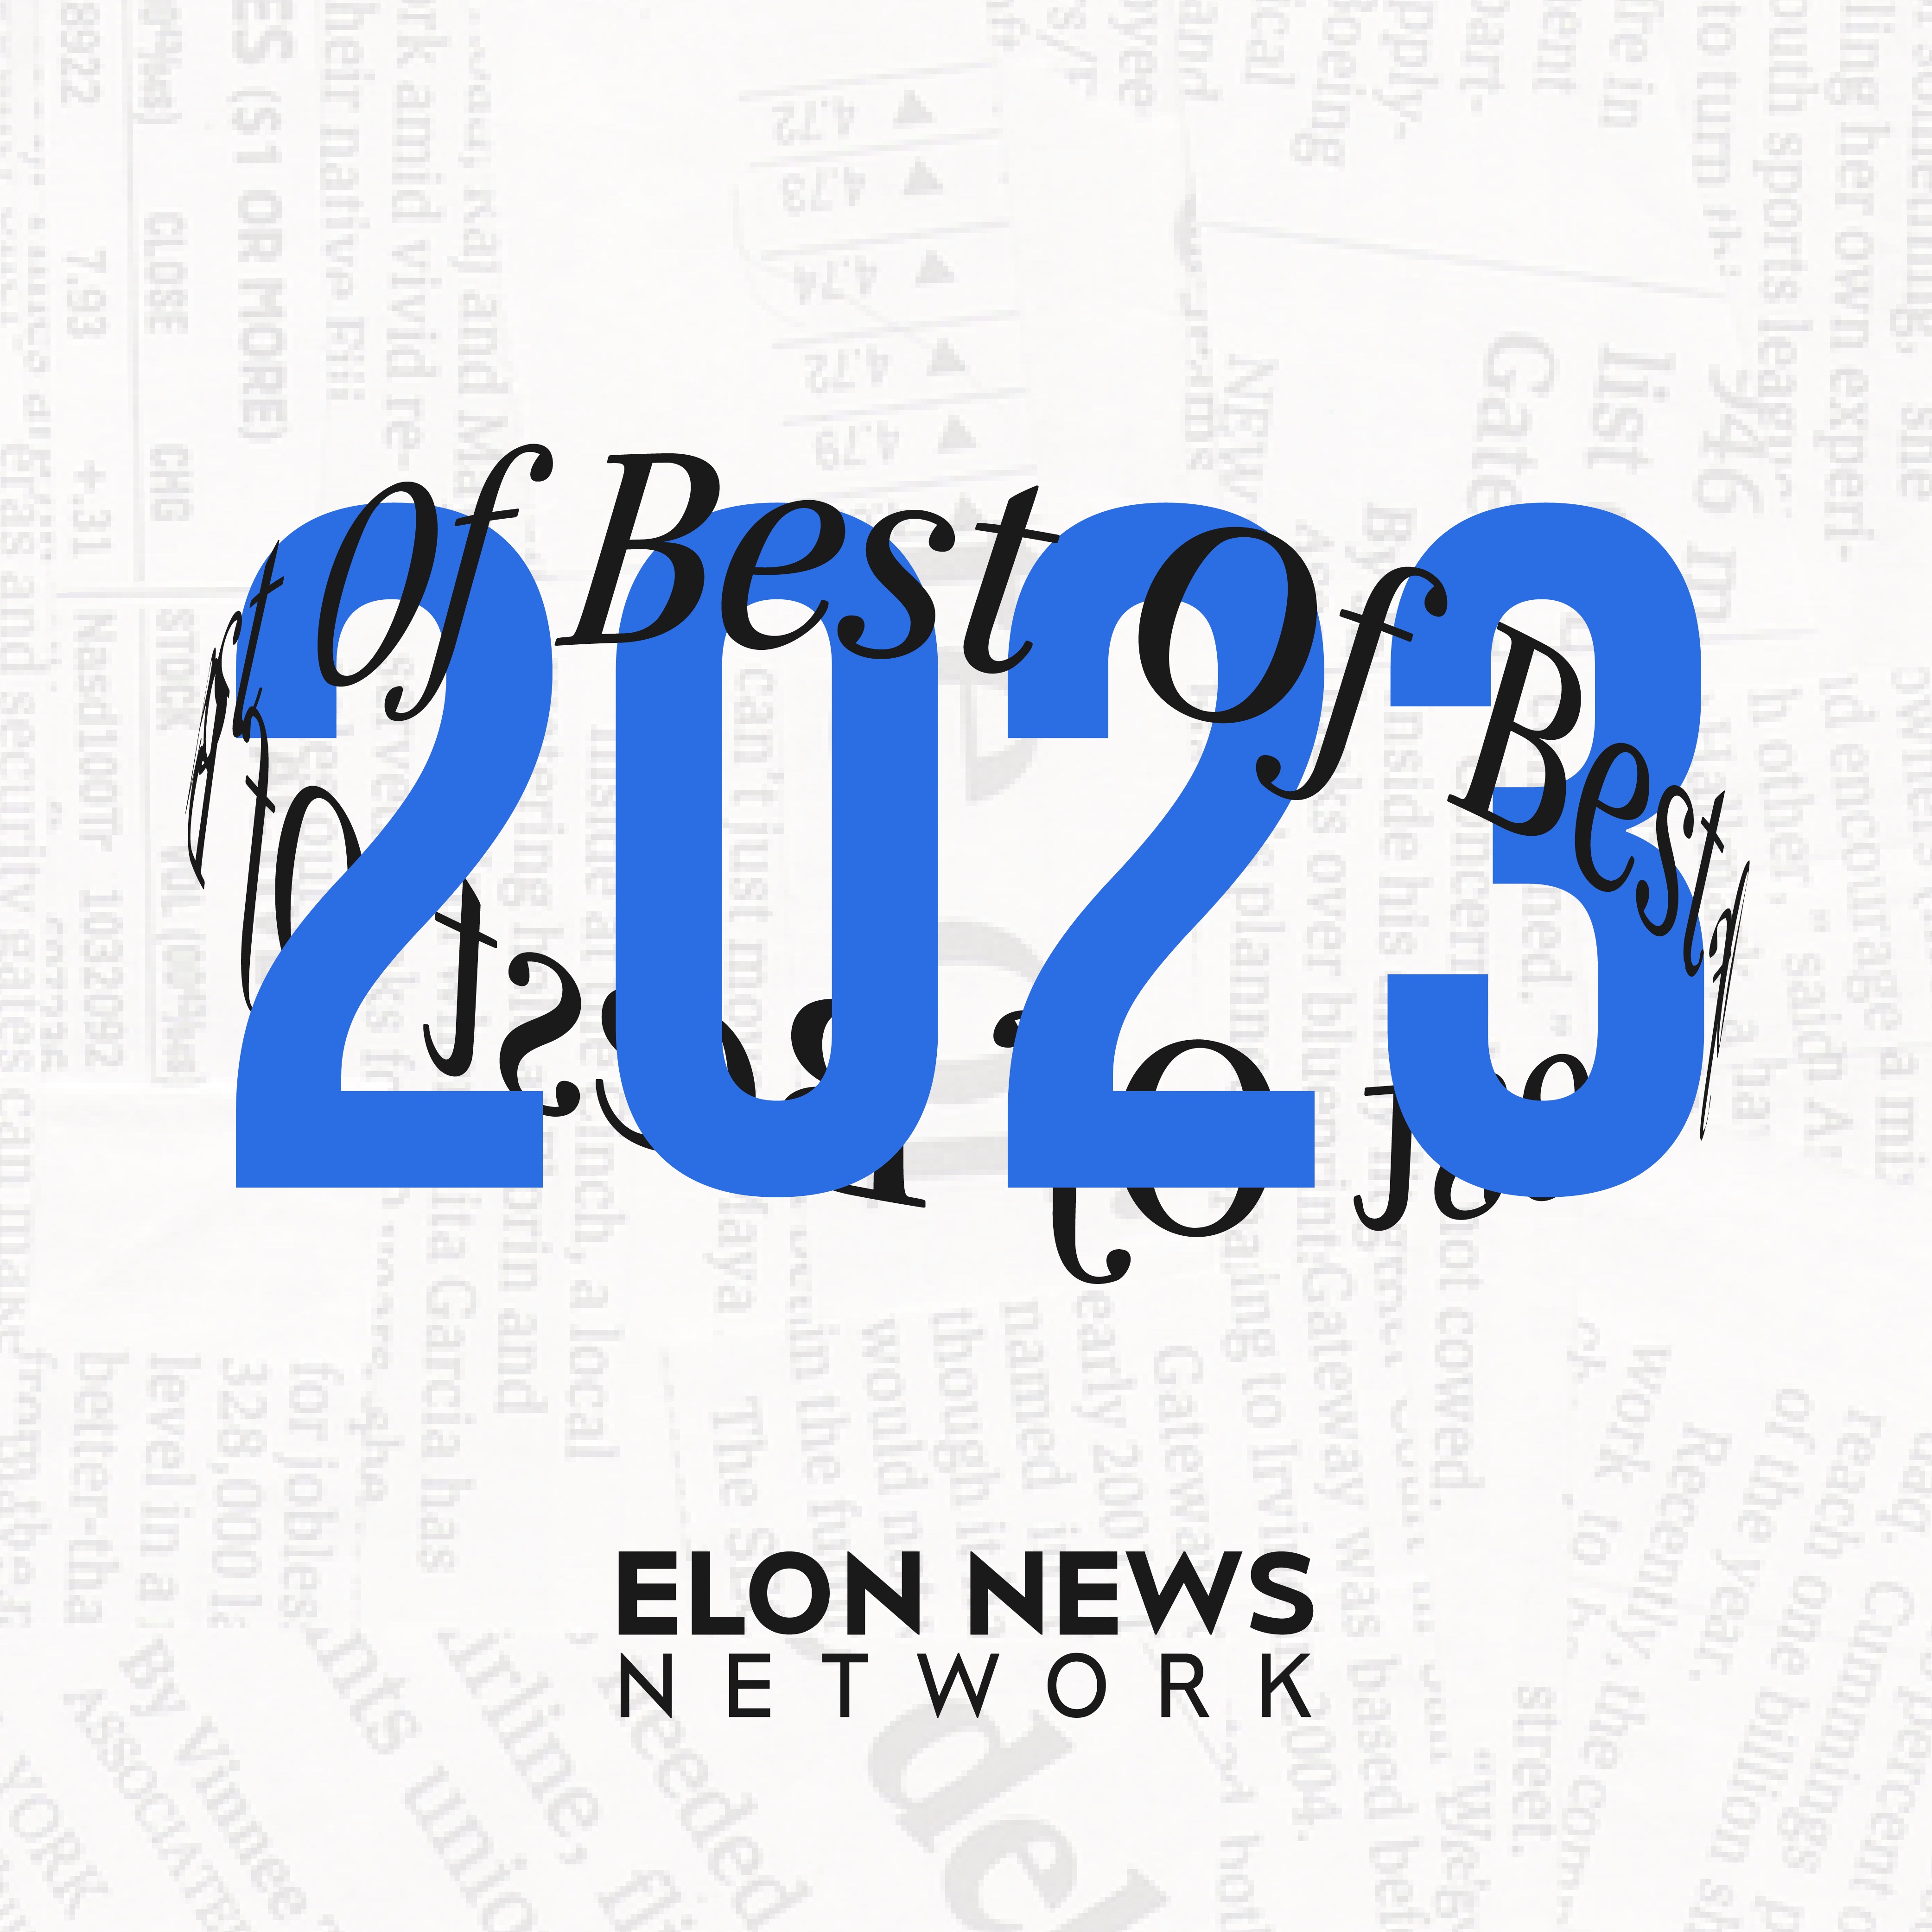 Elon News Network Best Of 2023 Graphic